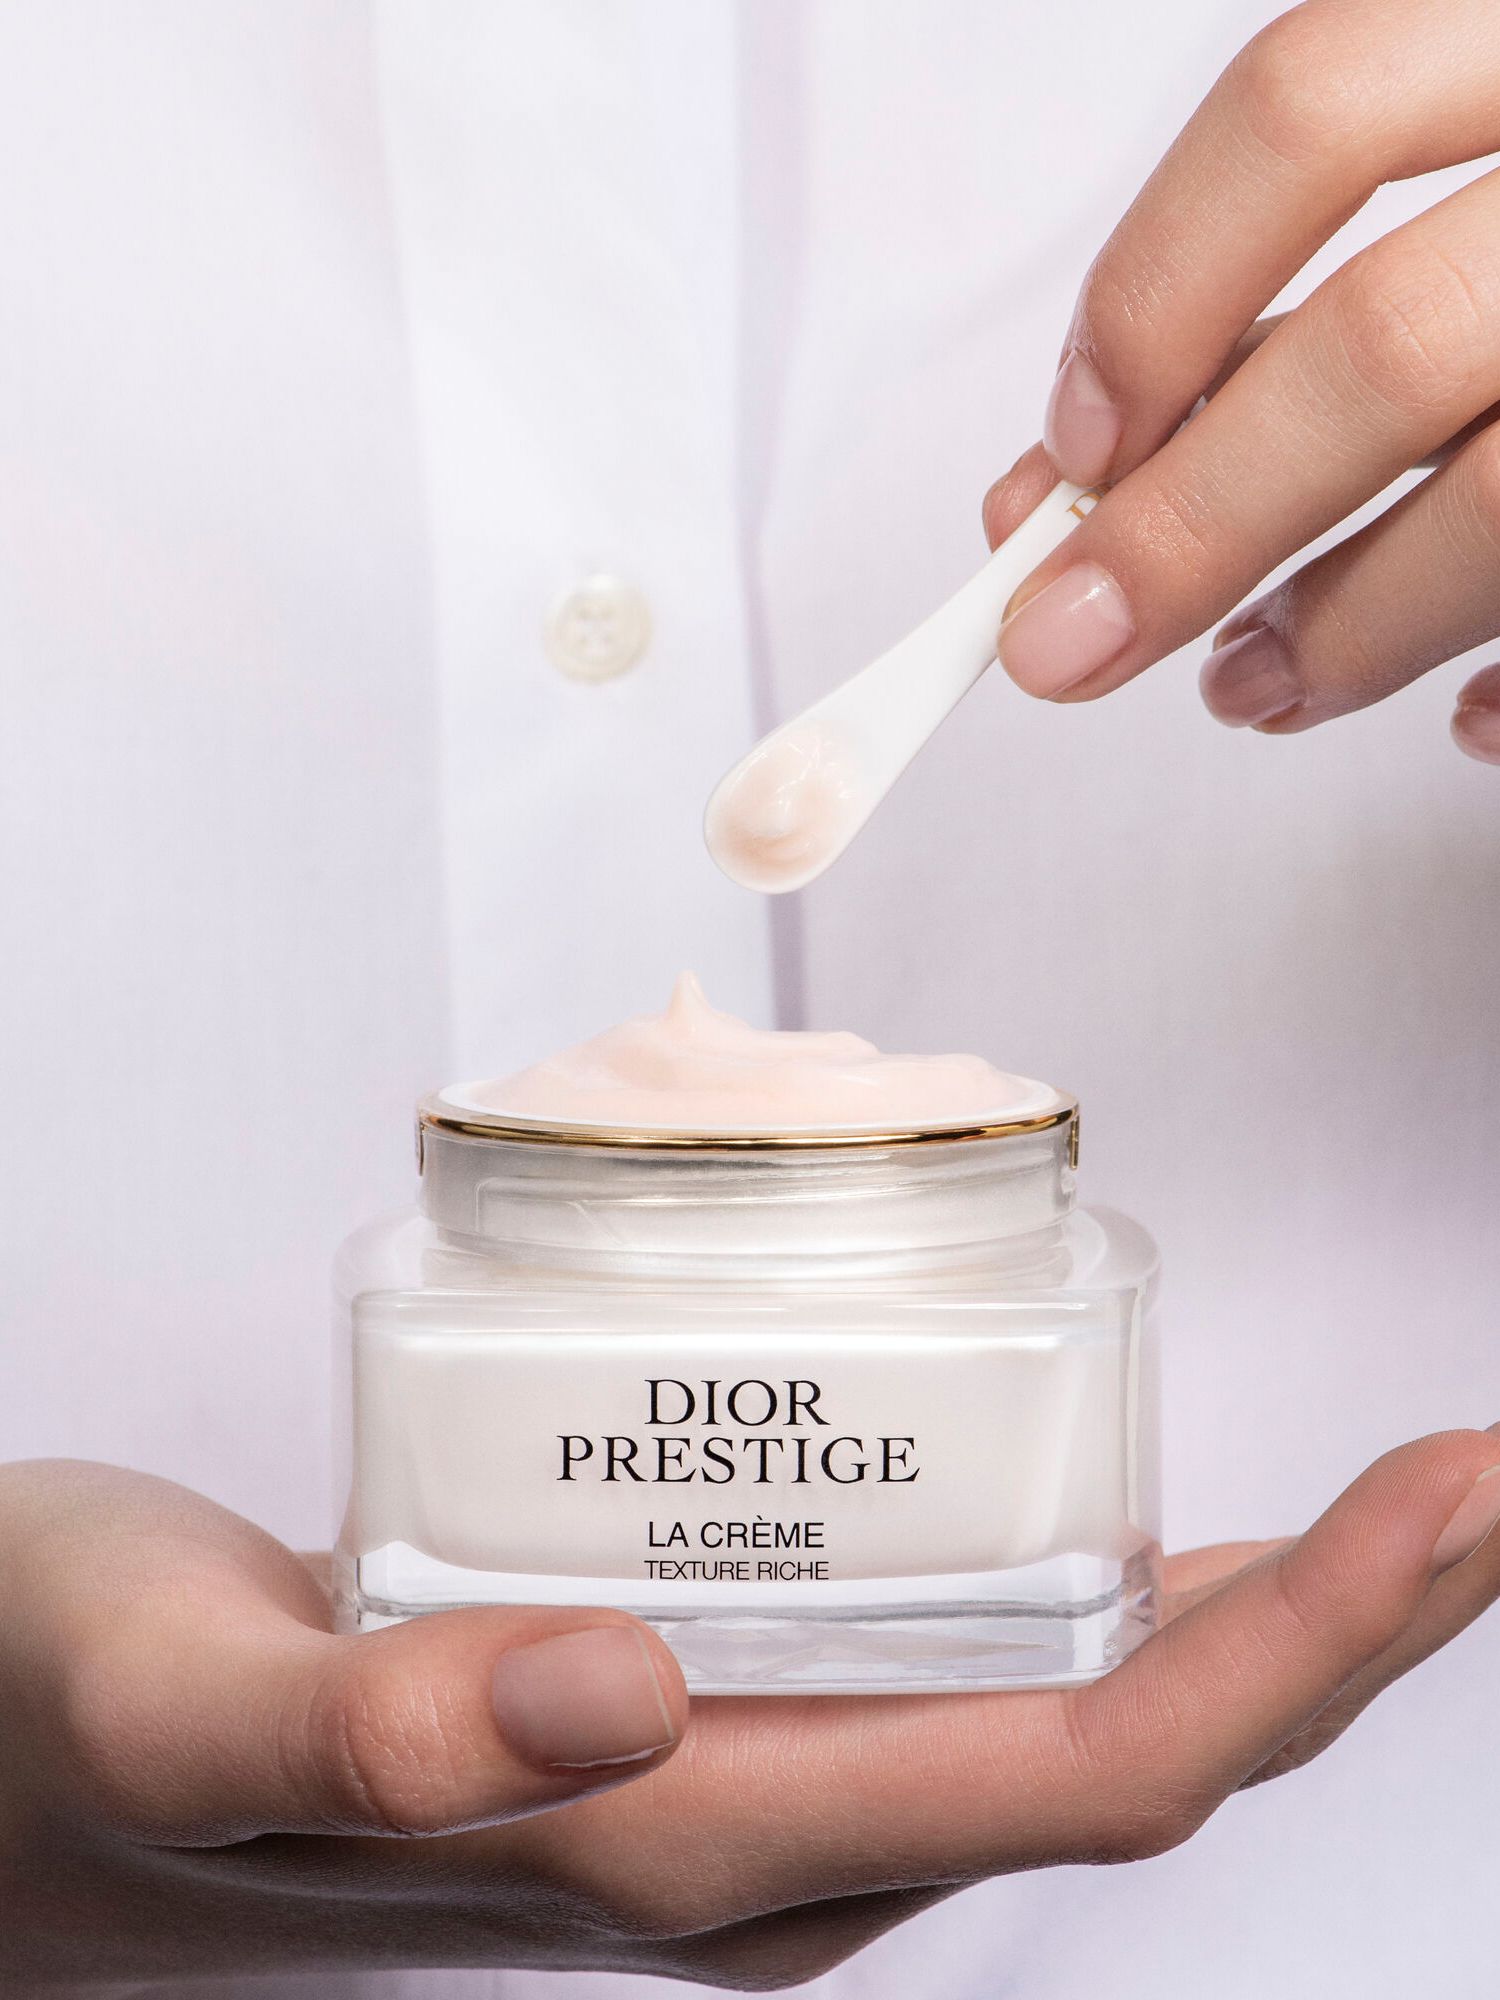 DIOR Prestige La Crème Texture Riche Jar, 50ml 7